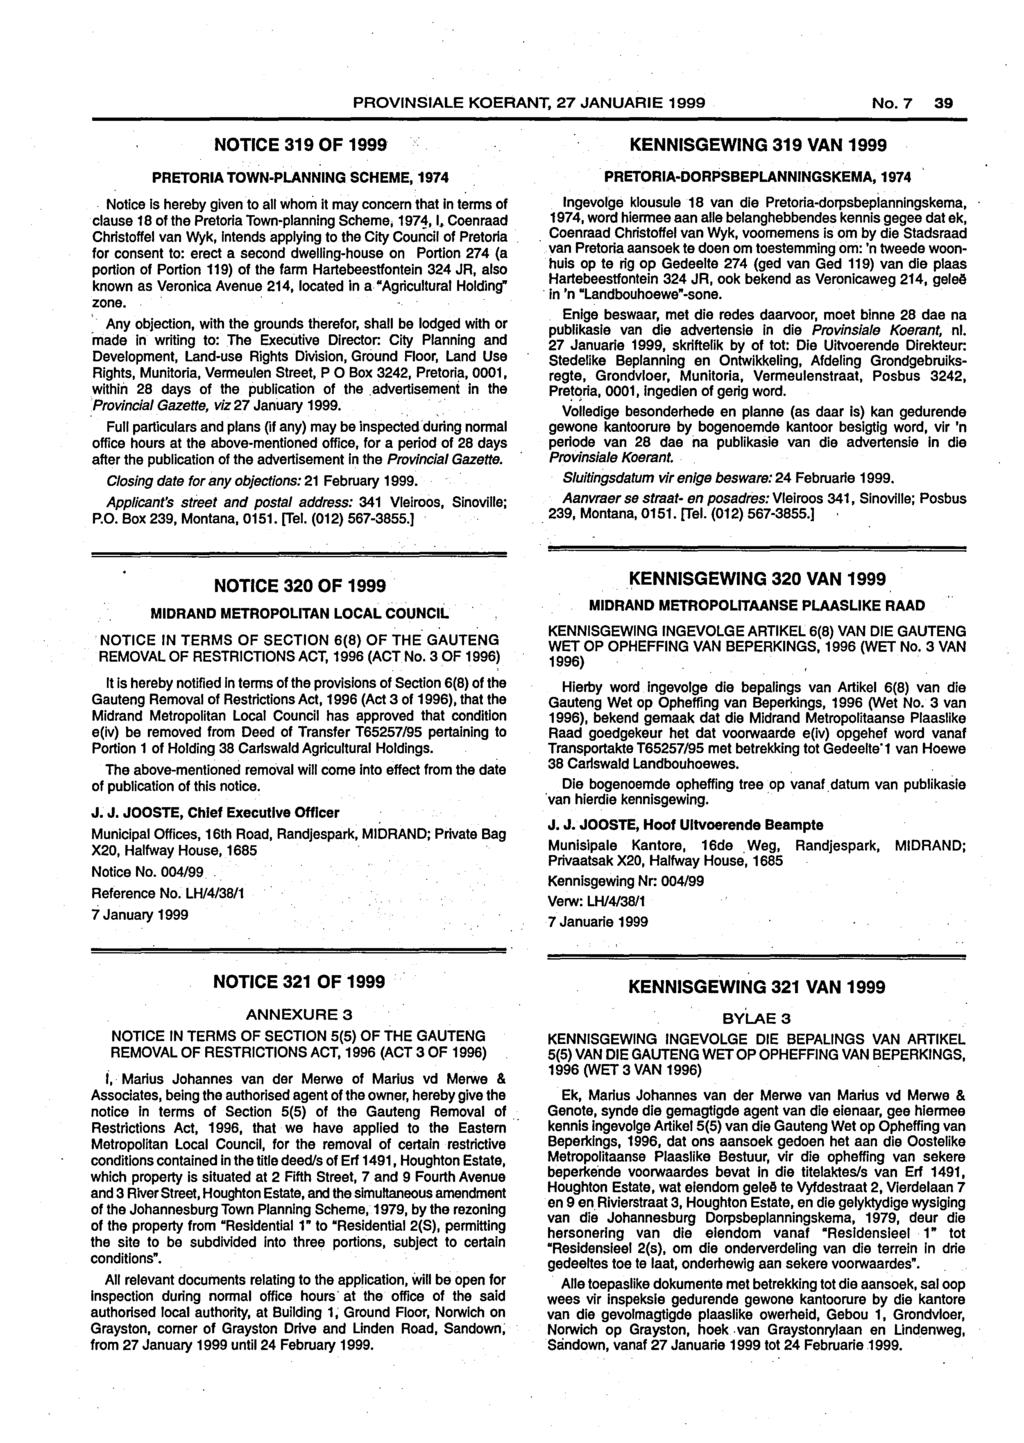 PROVINSIALE KOERANT, 27 JANUARIE 1999 No.7 39 NOTICE 319 OF 1999 PRETORIA TOWN-PLANNING SCHEME, 1974.